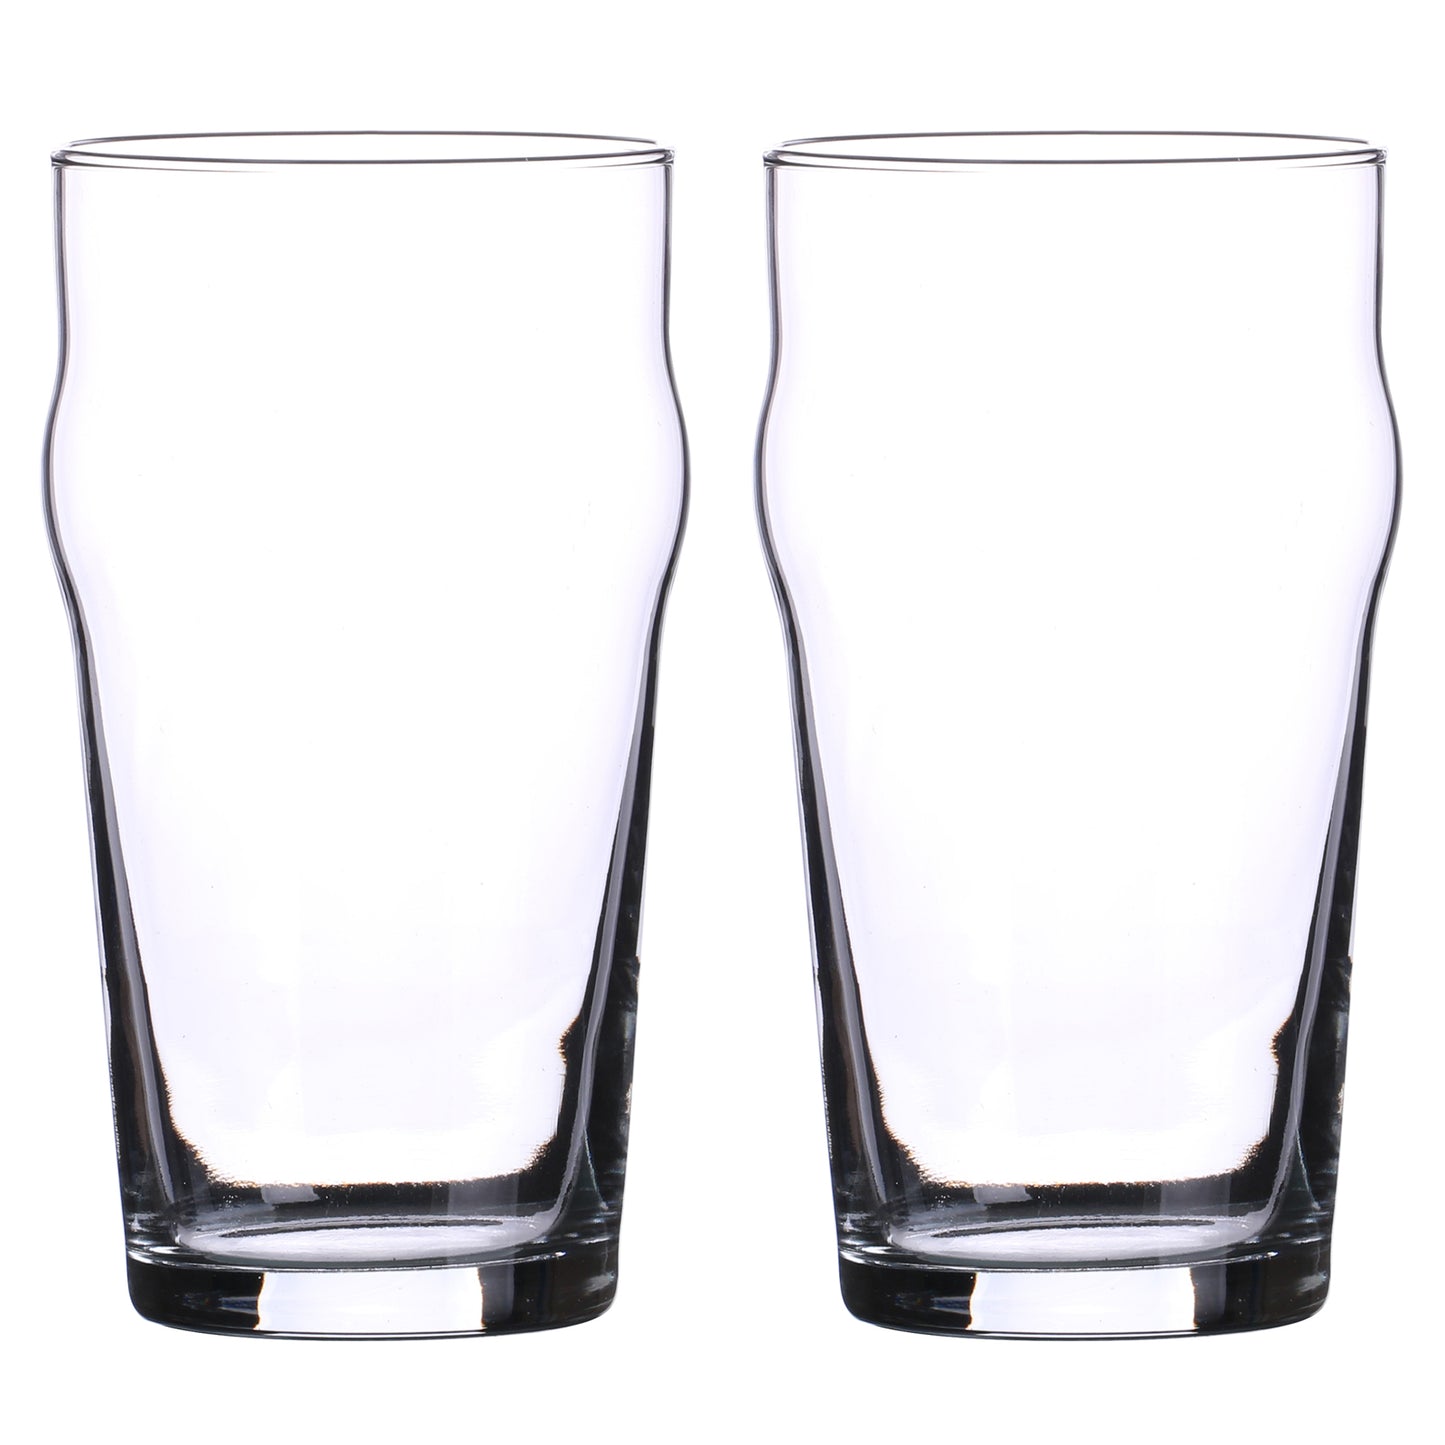 525ml Pint Style Beer Glasses